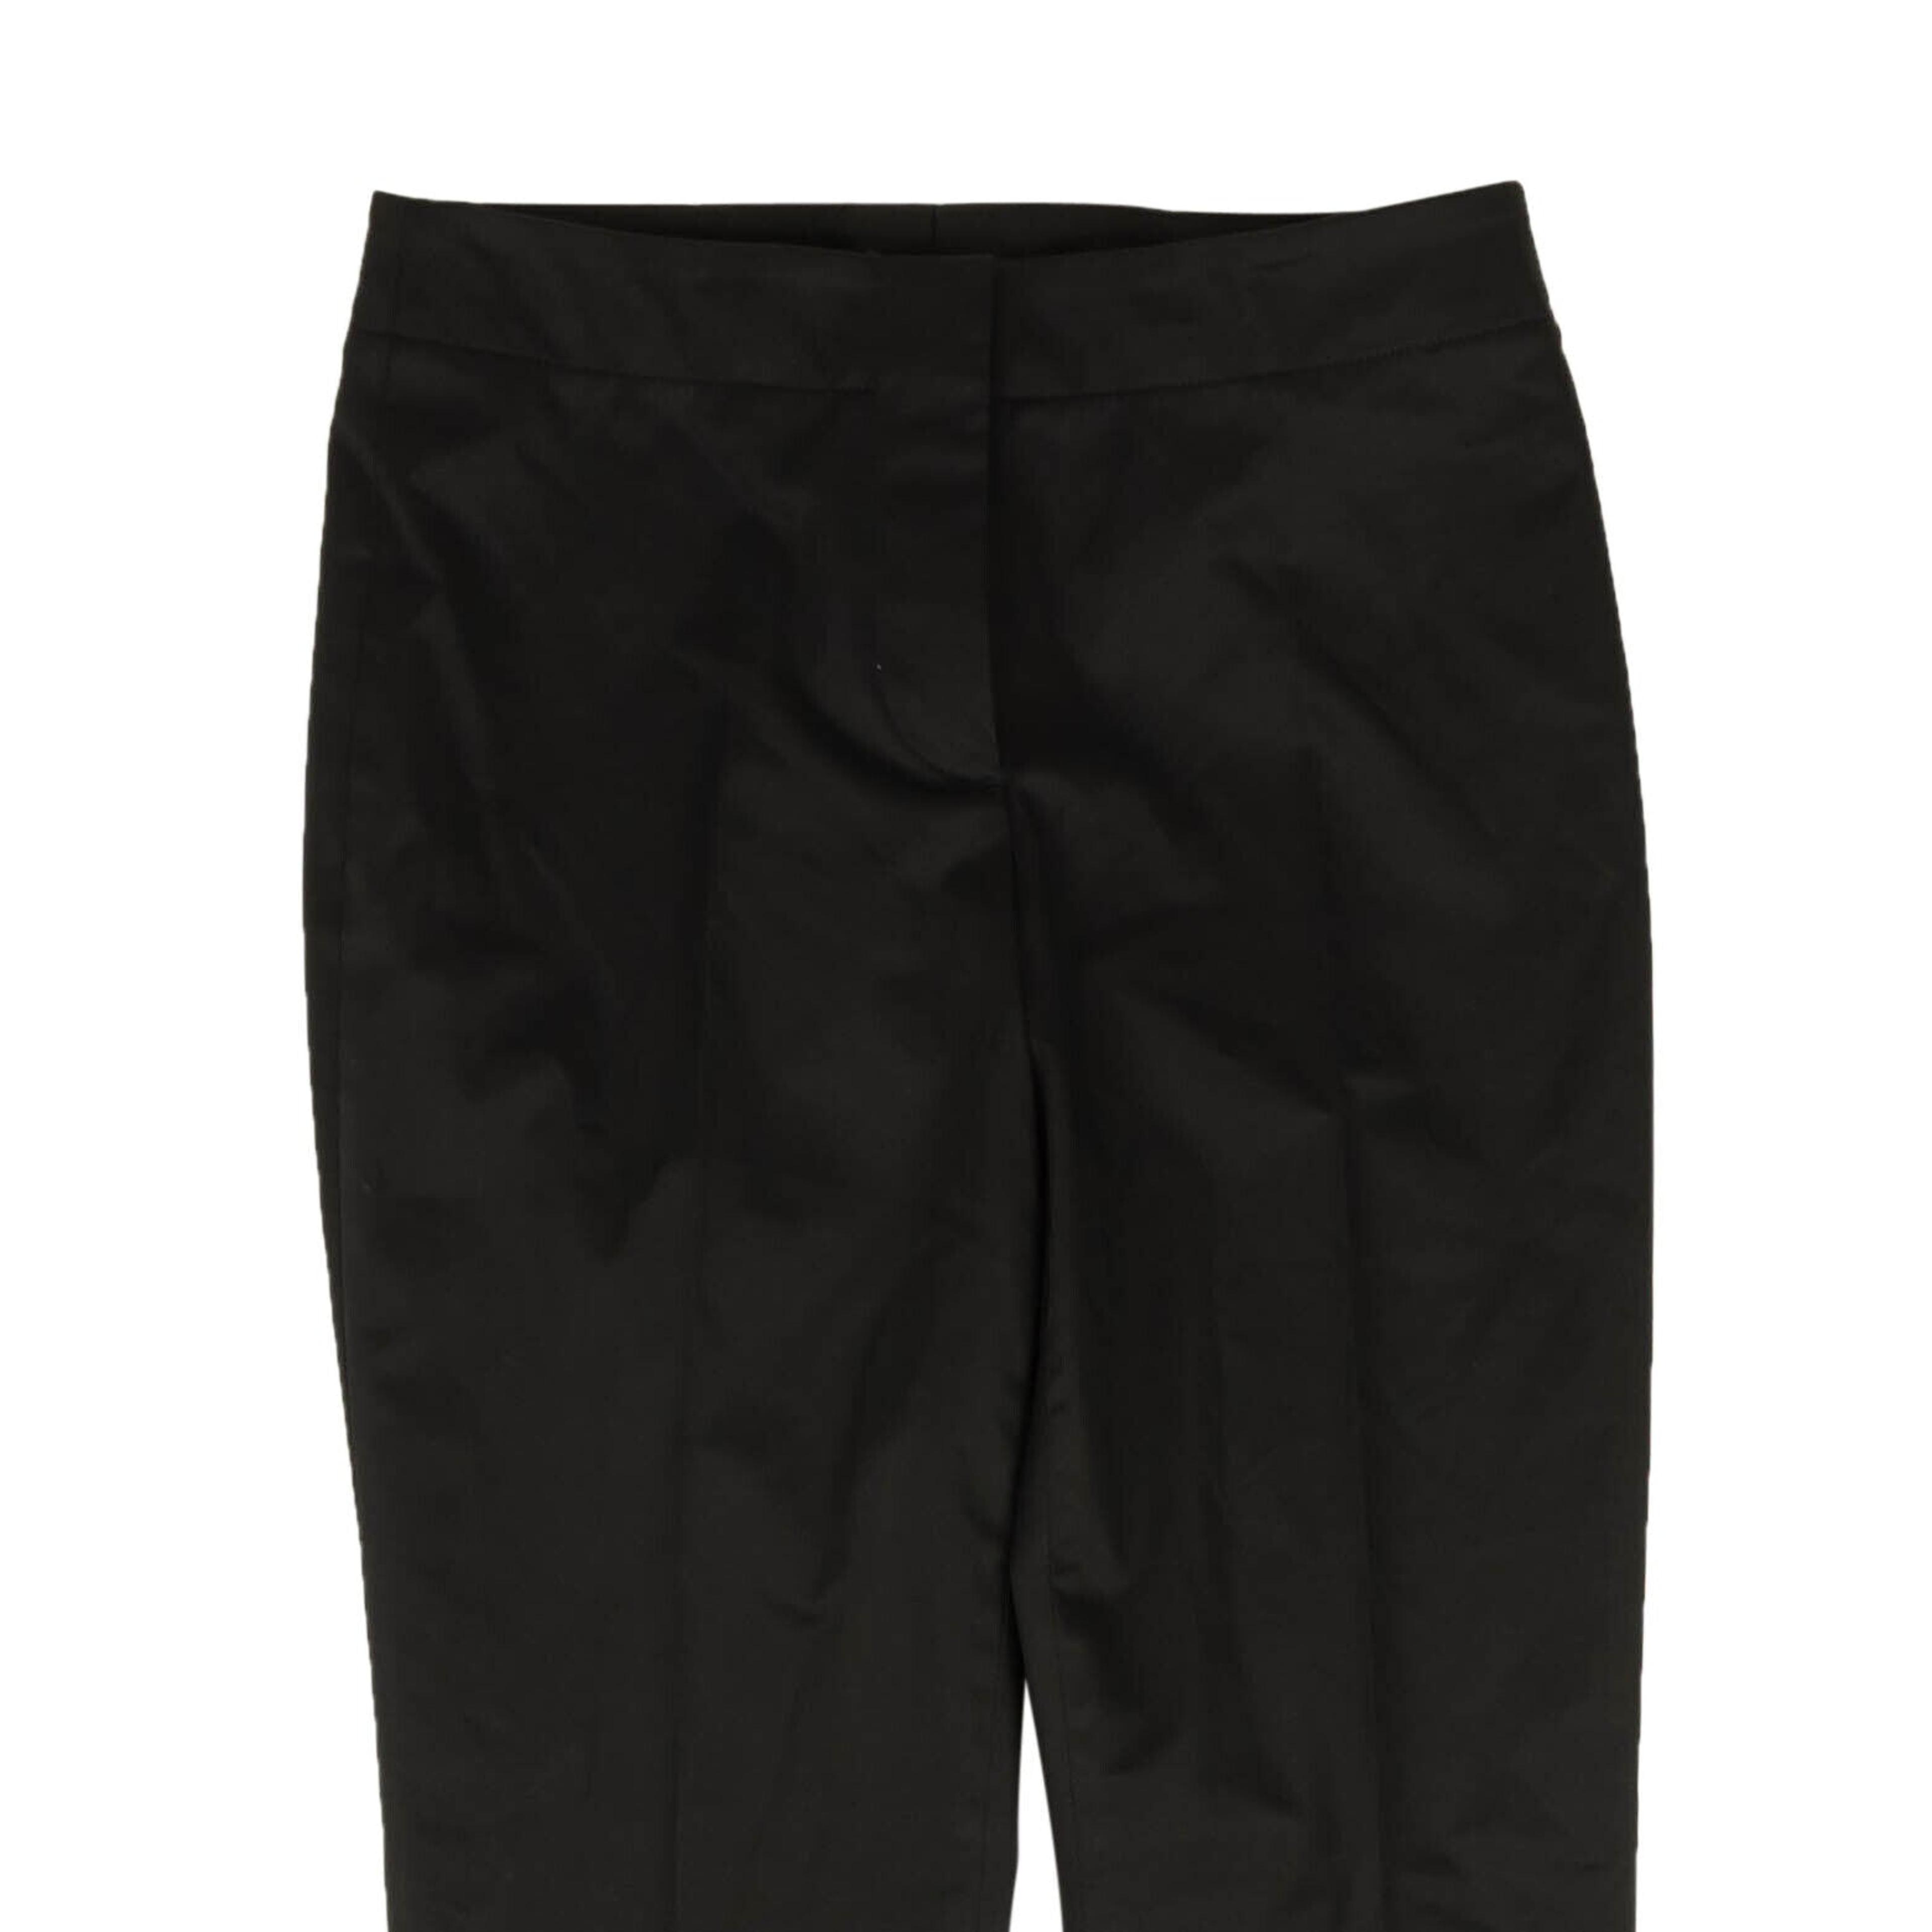 Alternate View 1 of Incotex Flat Front Dress Pants - Black